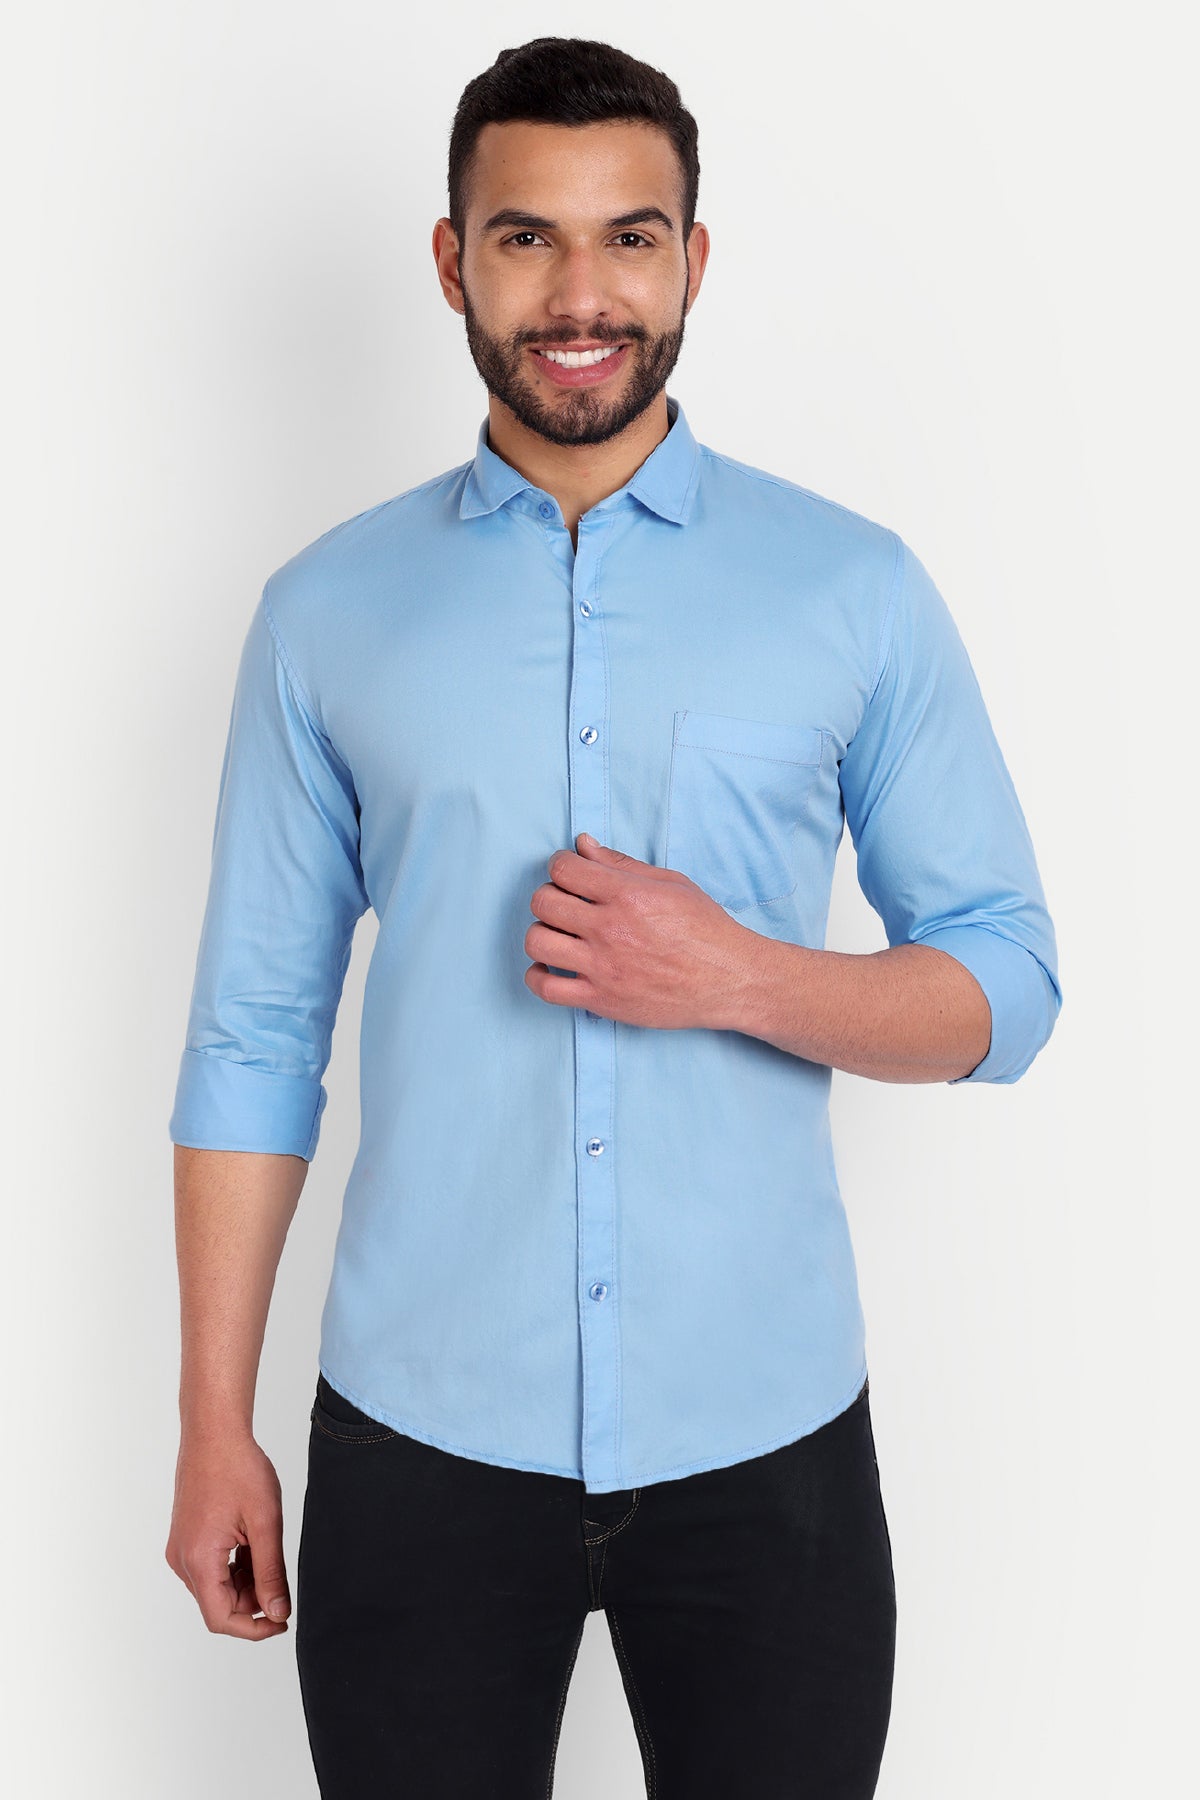 Men's Cotton Silk Blend Solid Shirt in Royal Blue | Casual shirts for men,  Formal pant for men, Shirts